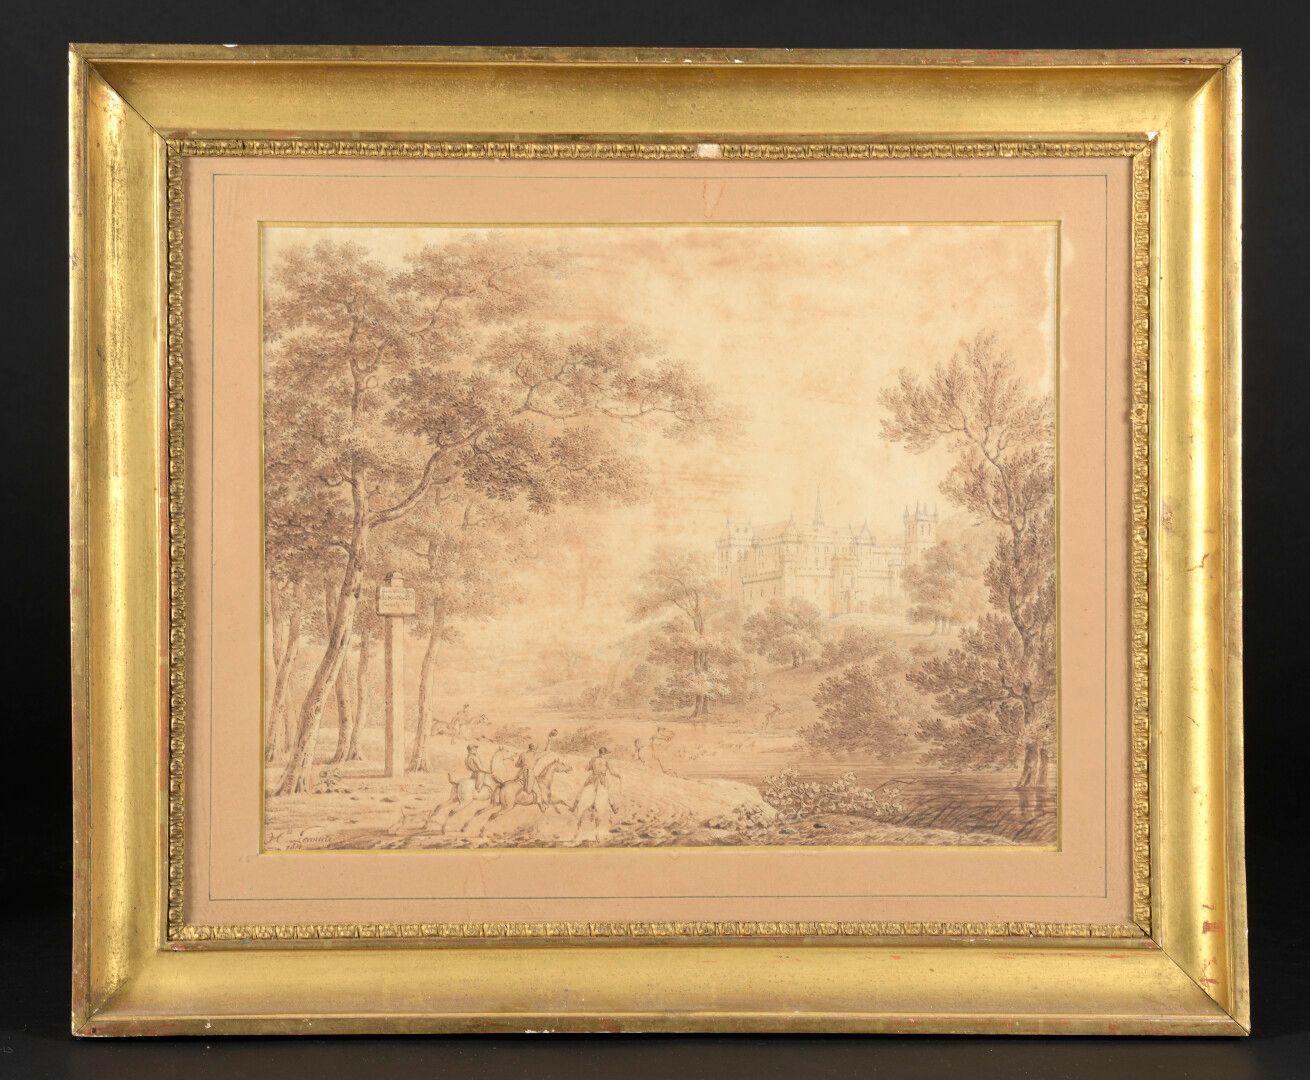 Null 伊波利特-勒科姆特(Hippolyte LECOMTE) (1781-1857)

英国城堡前的狩猎场景

洗涤

左下方有签名，日期为1811年。
&hellip;